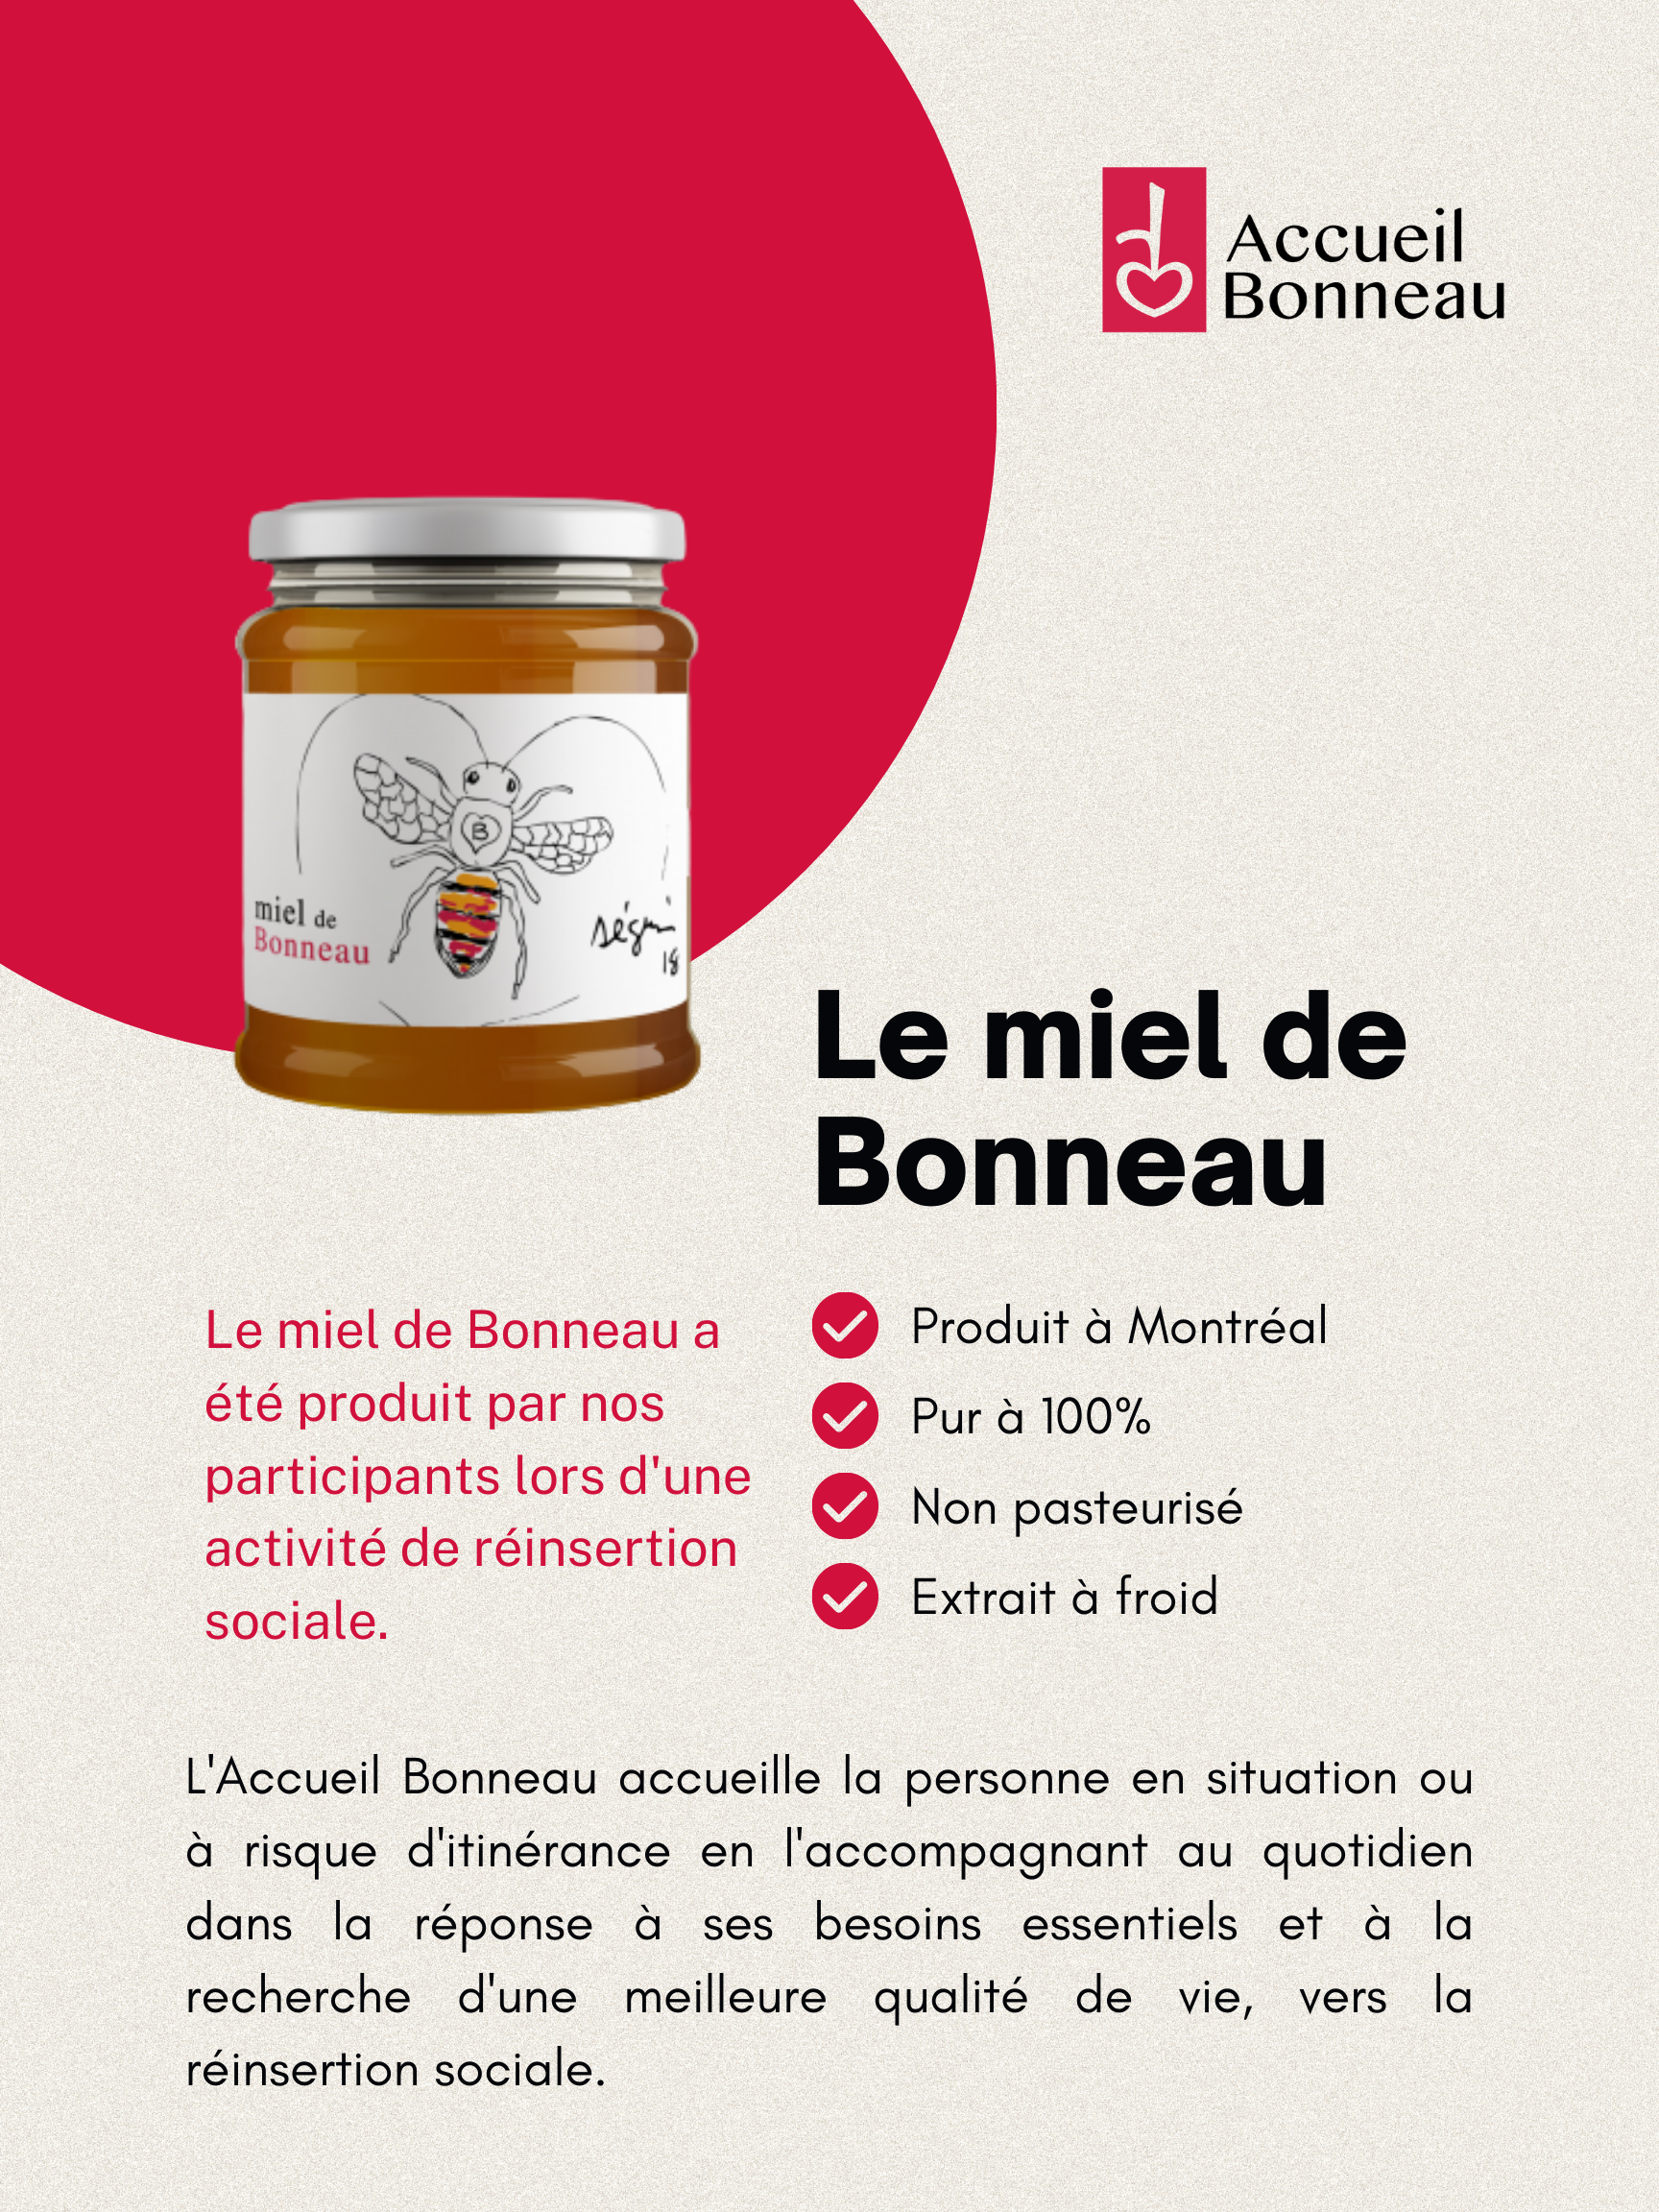 Bonneau honey